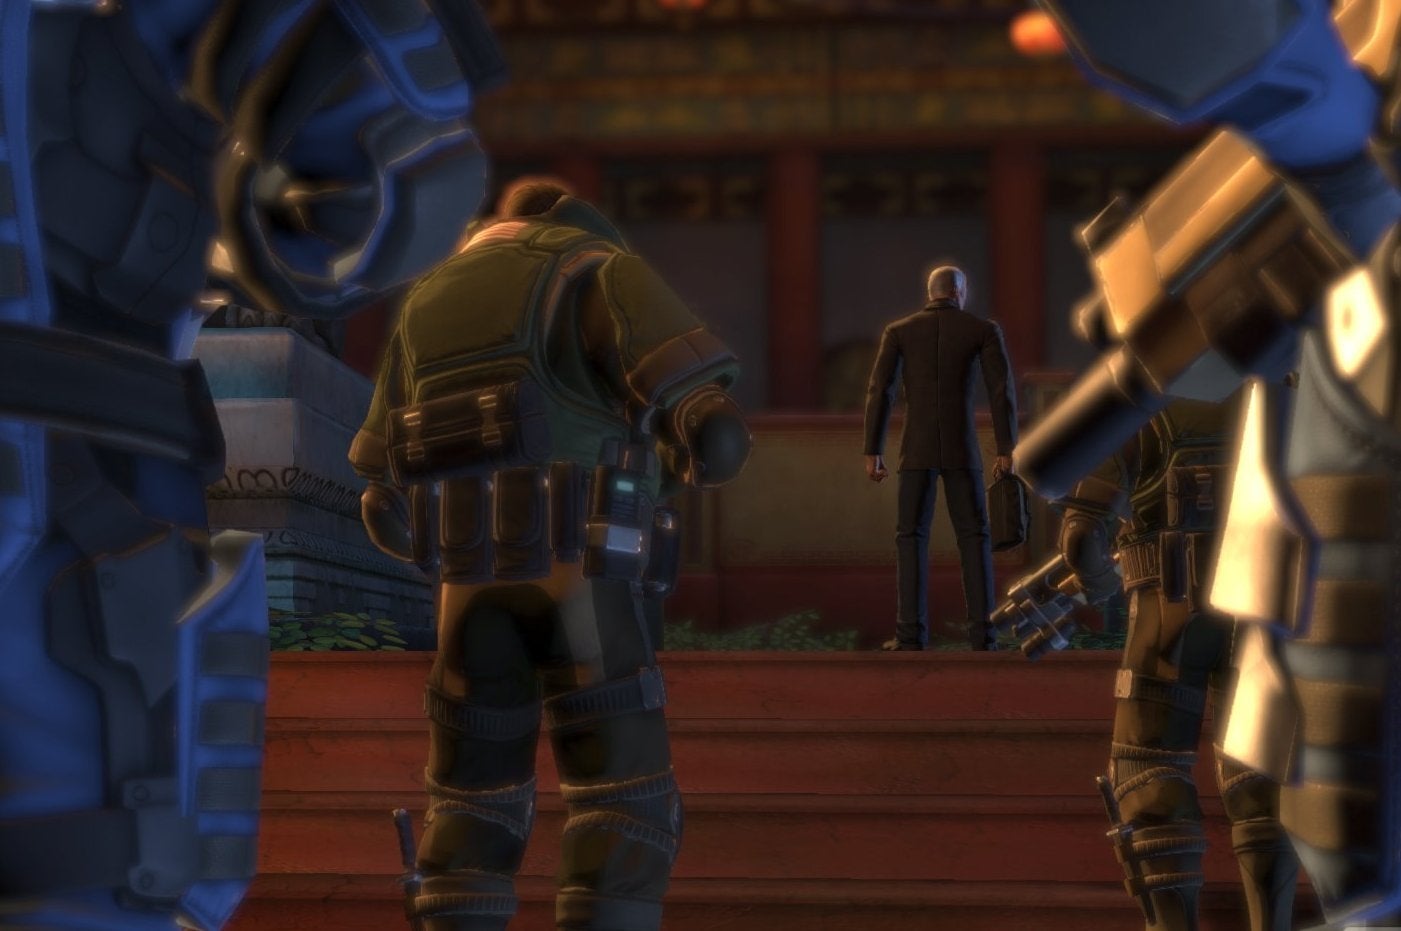 Immagine di XCOM: Enemy Unknown è in arrivo su PS Vita?